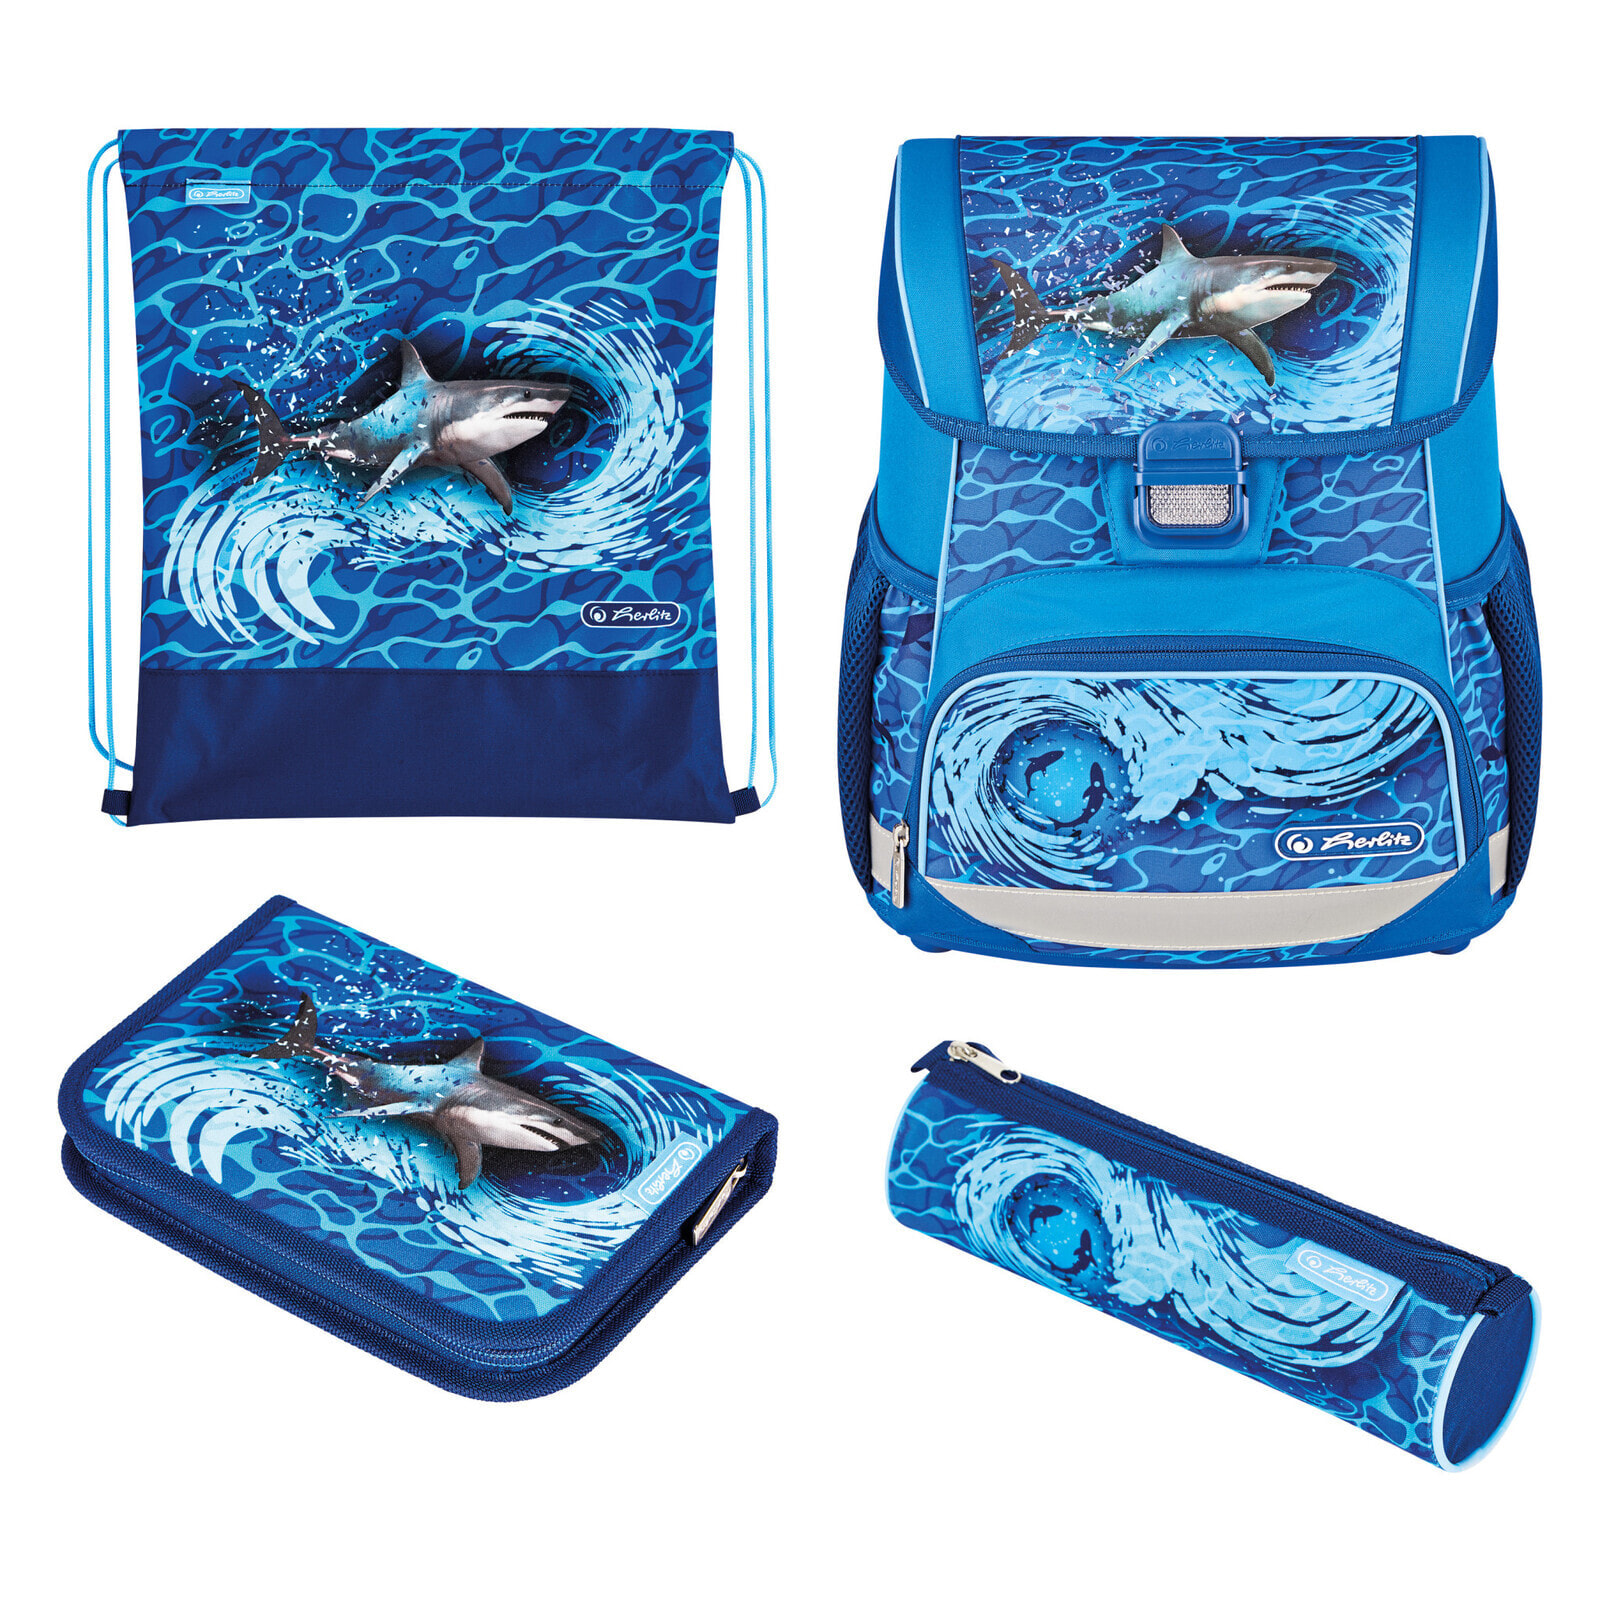 Loop Plus Blue Shark - Pencil pouch - Sport bag - Pencil case - School bag - Boy - Grade & elementary school - Backpack - 16 L - Front pocket - Side pocket